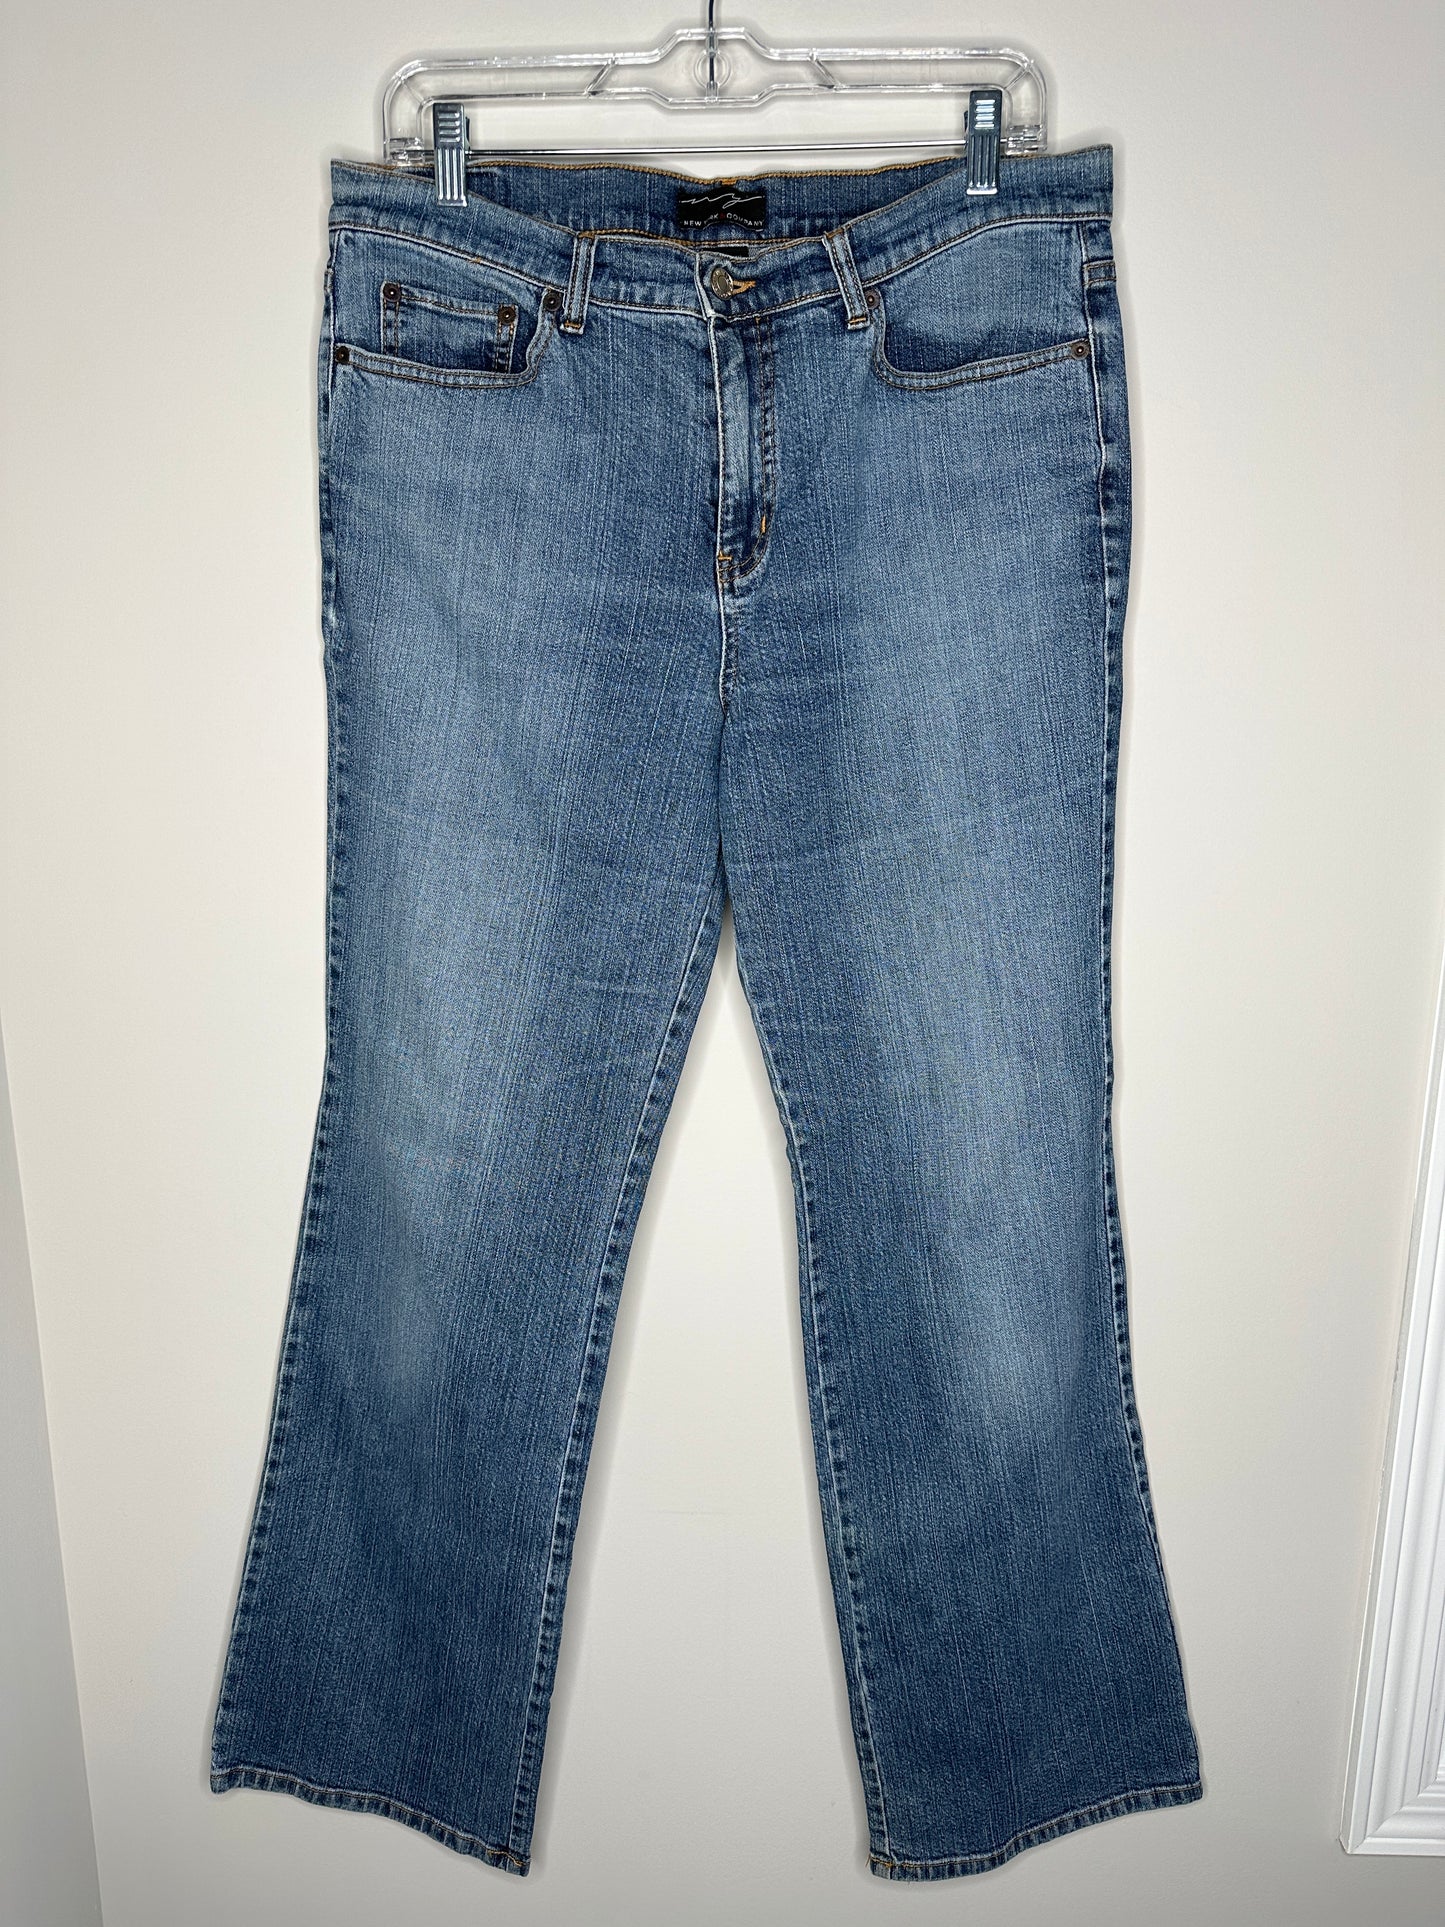 New York & Company Size 12 Blue Light/Medium Wash Straight Leg Jeans